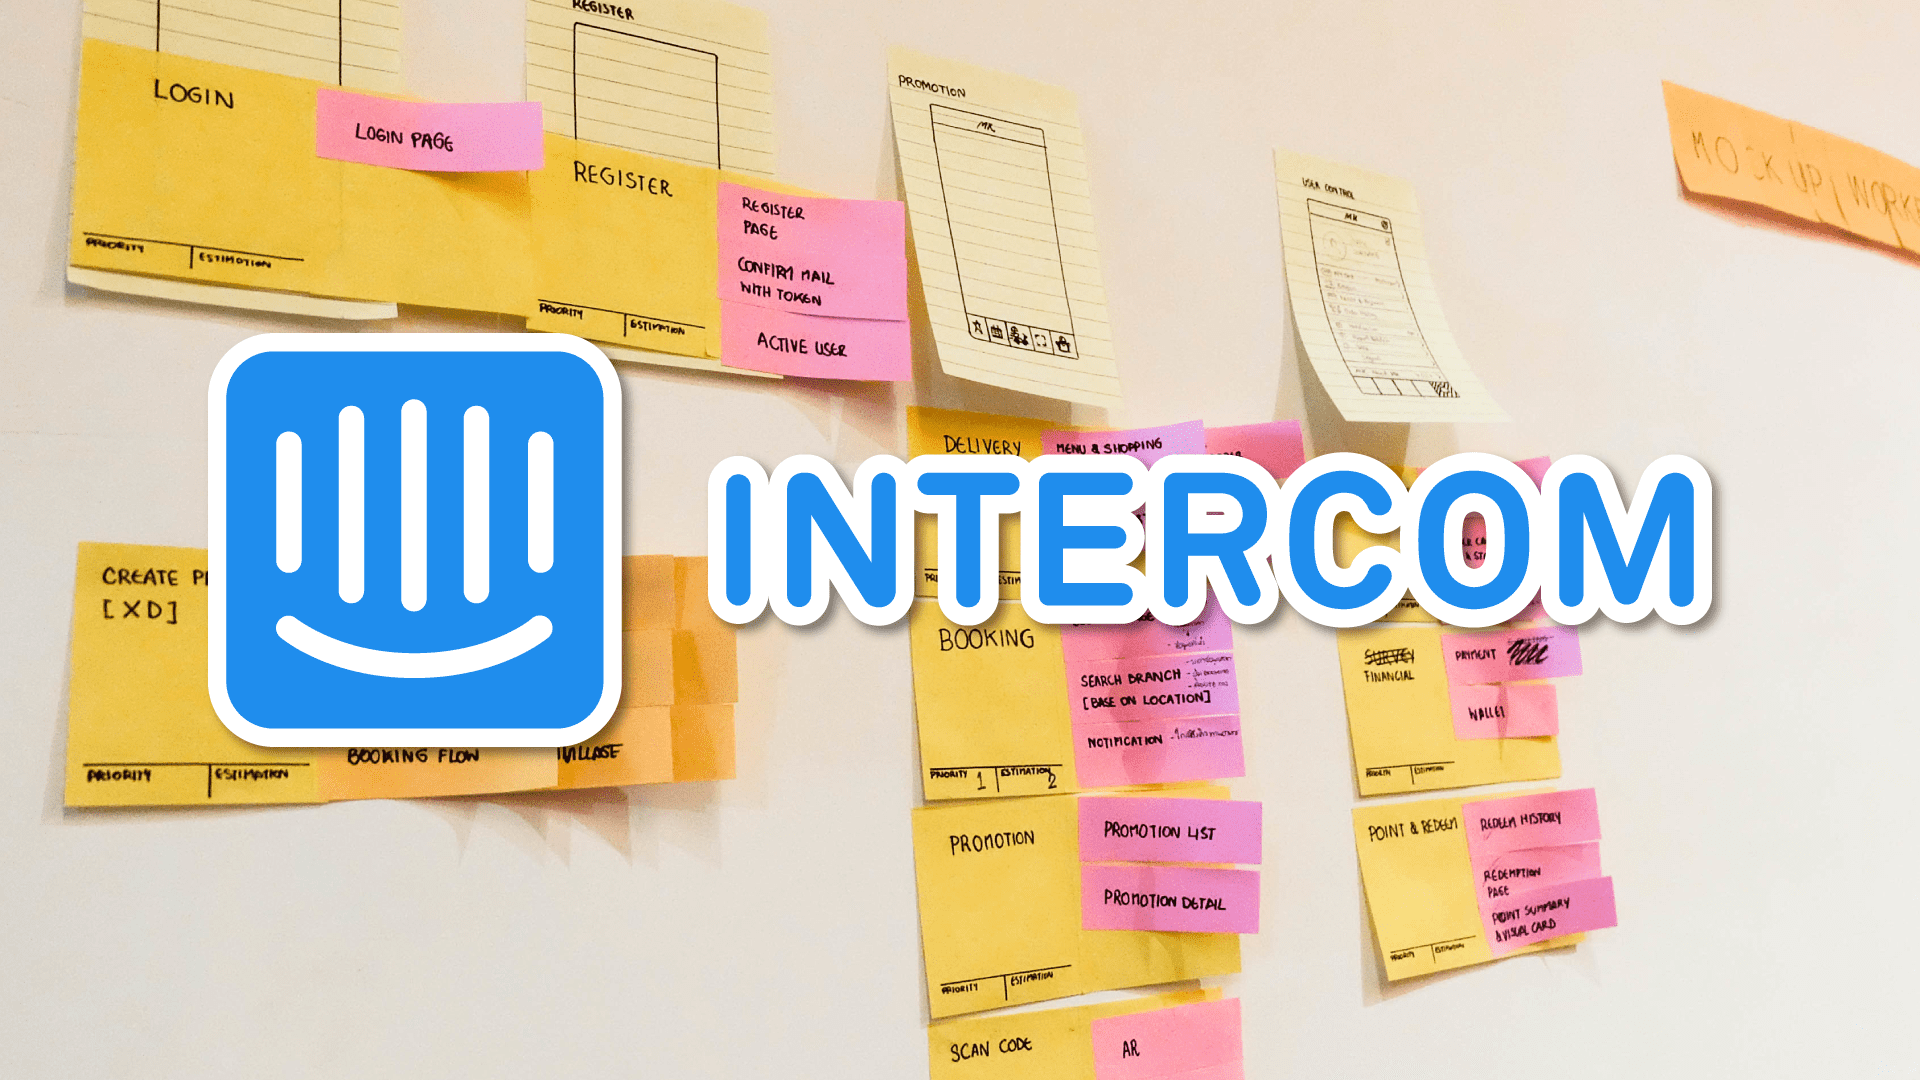 zendesk chat vs intercom, intercom vs zendesk, intercom vs zendesk chat, zendesk chat vs intercom chat